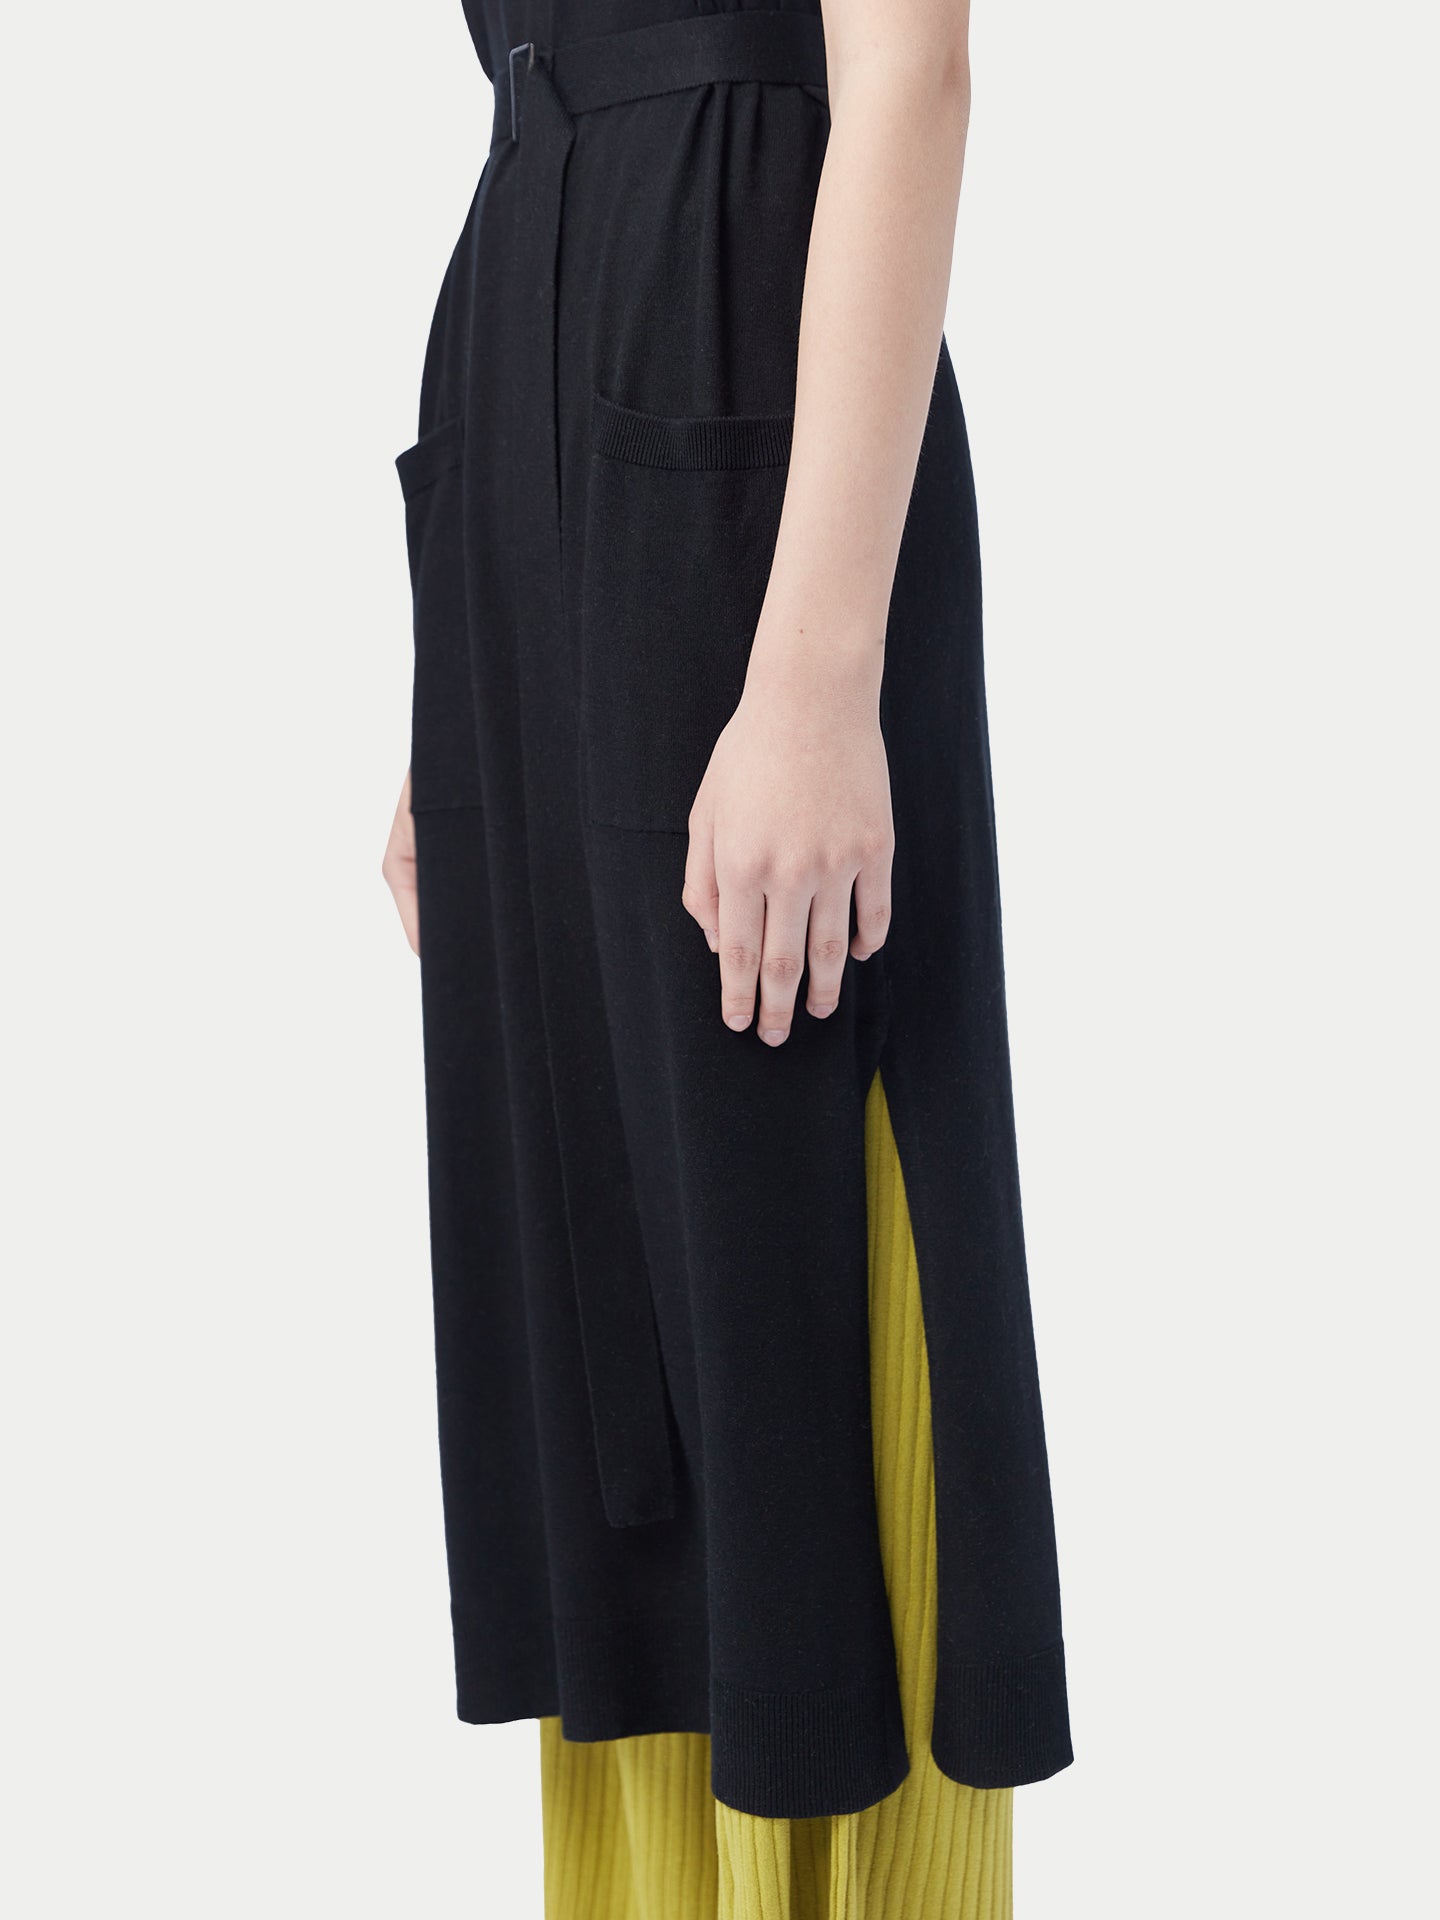 Women's Sleeveless Silk Cashmere Polo Dress Black - Gobi Cashmere